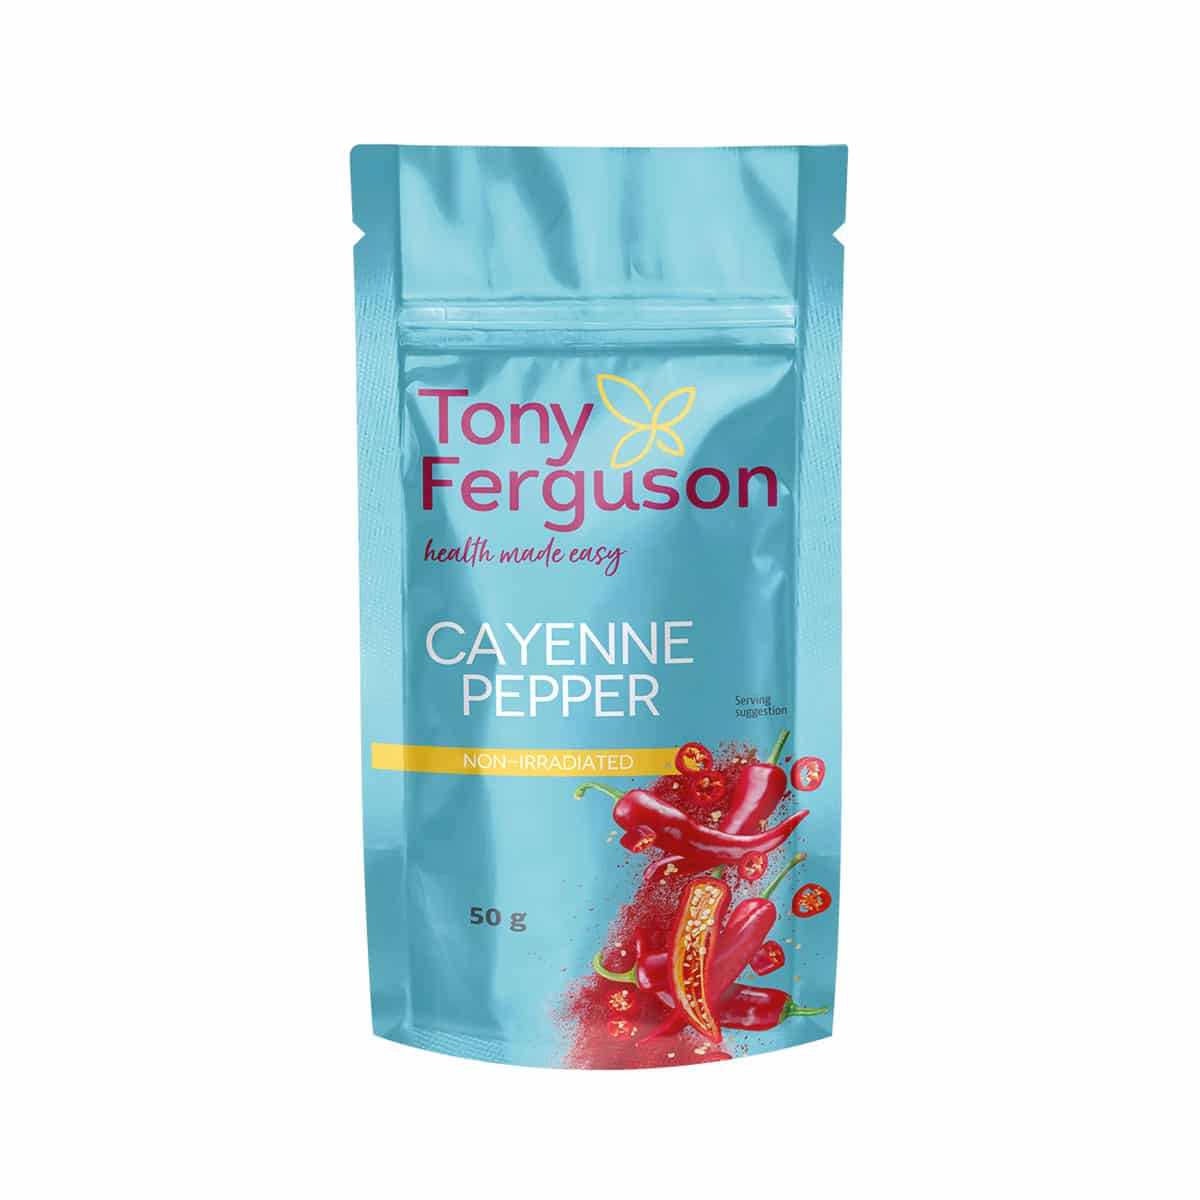 Tony Ferguson Cayenne Pepper Spice Refill - 50g